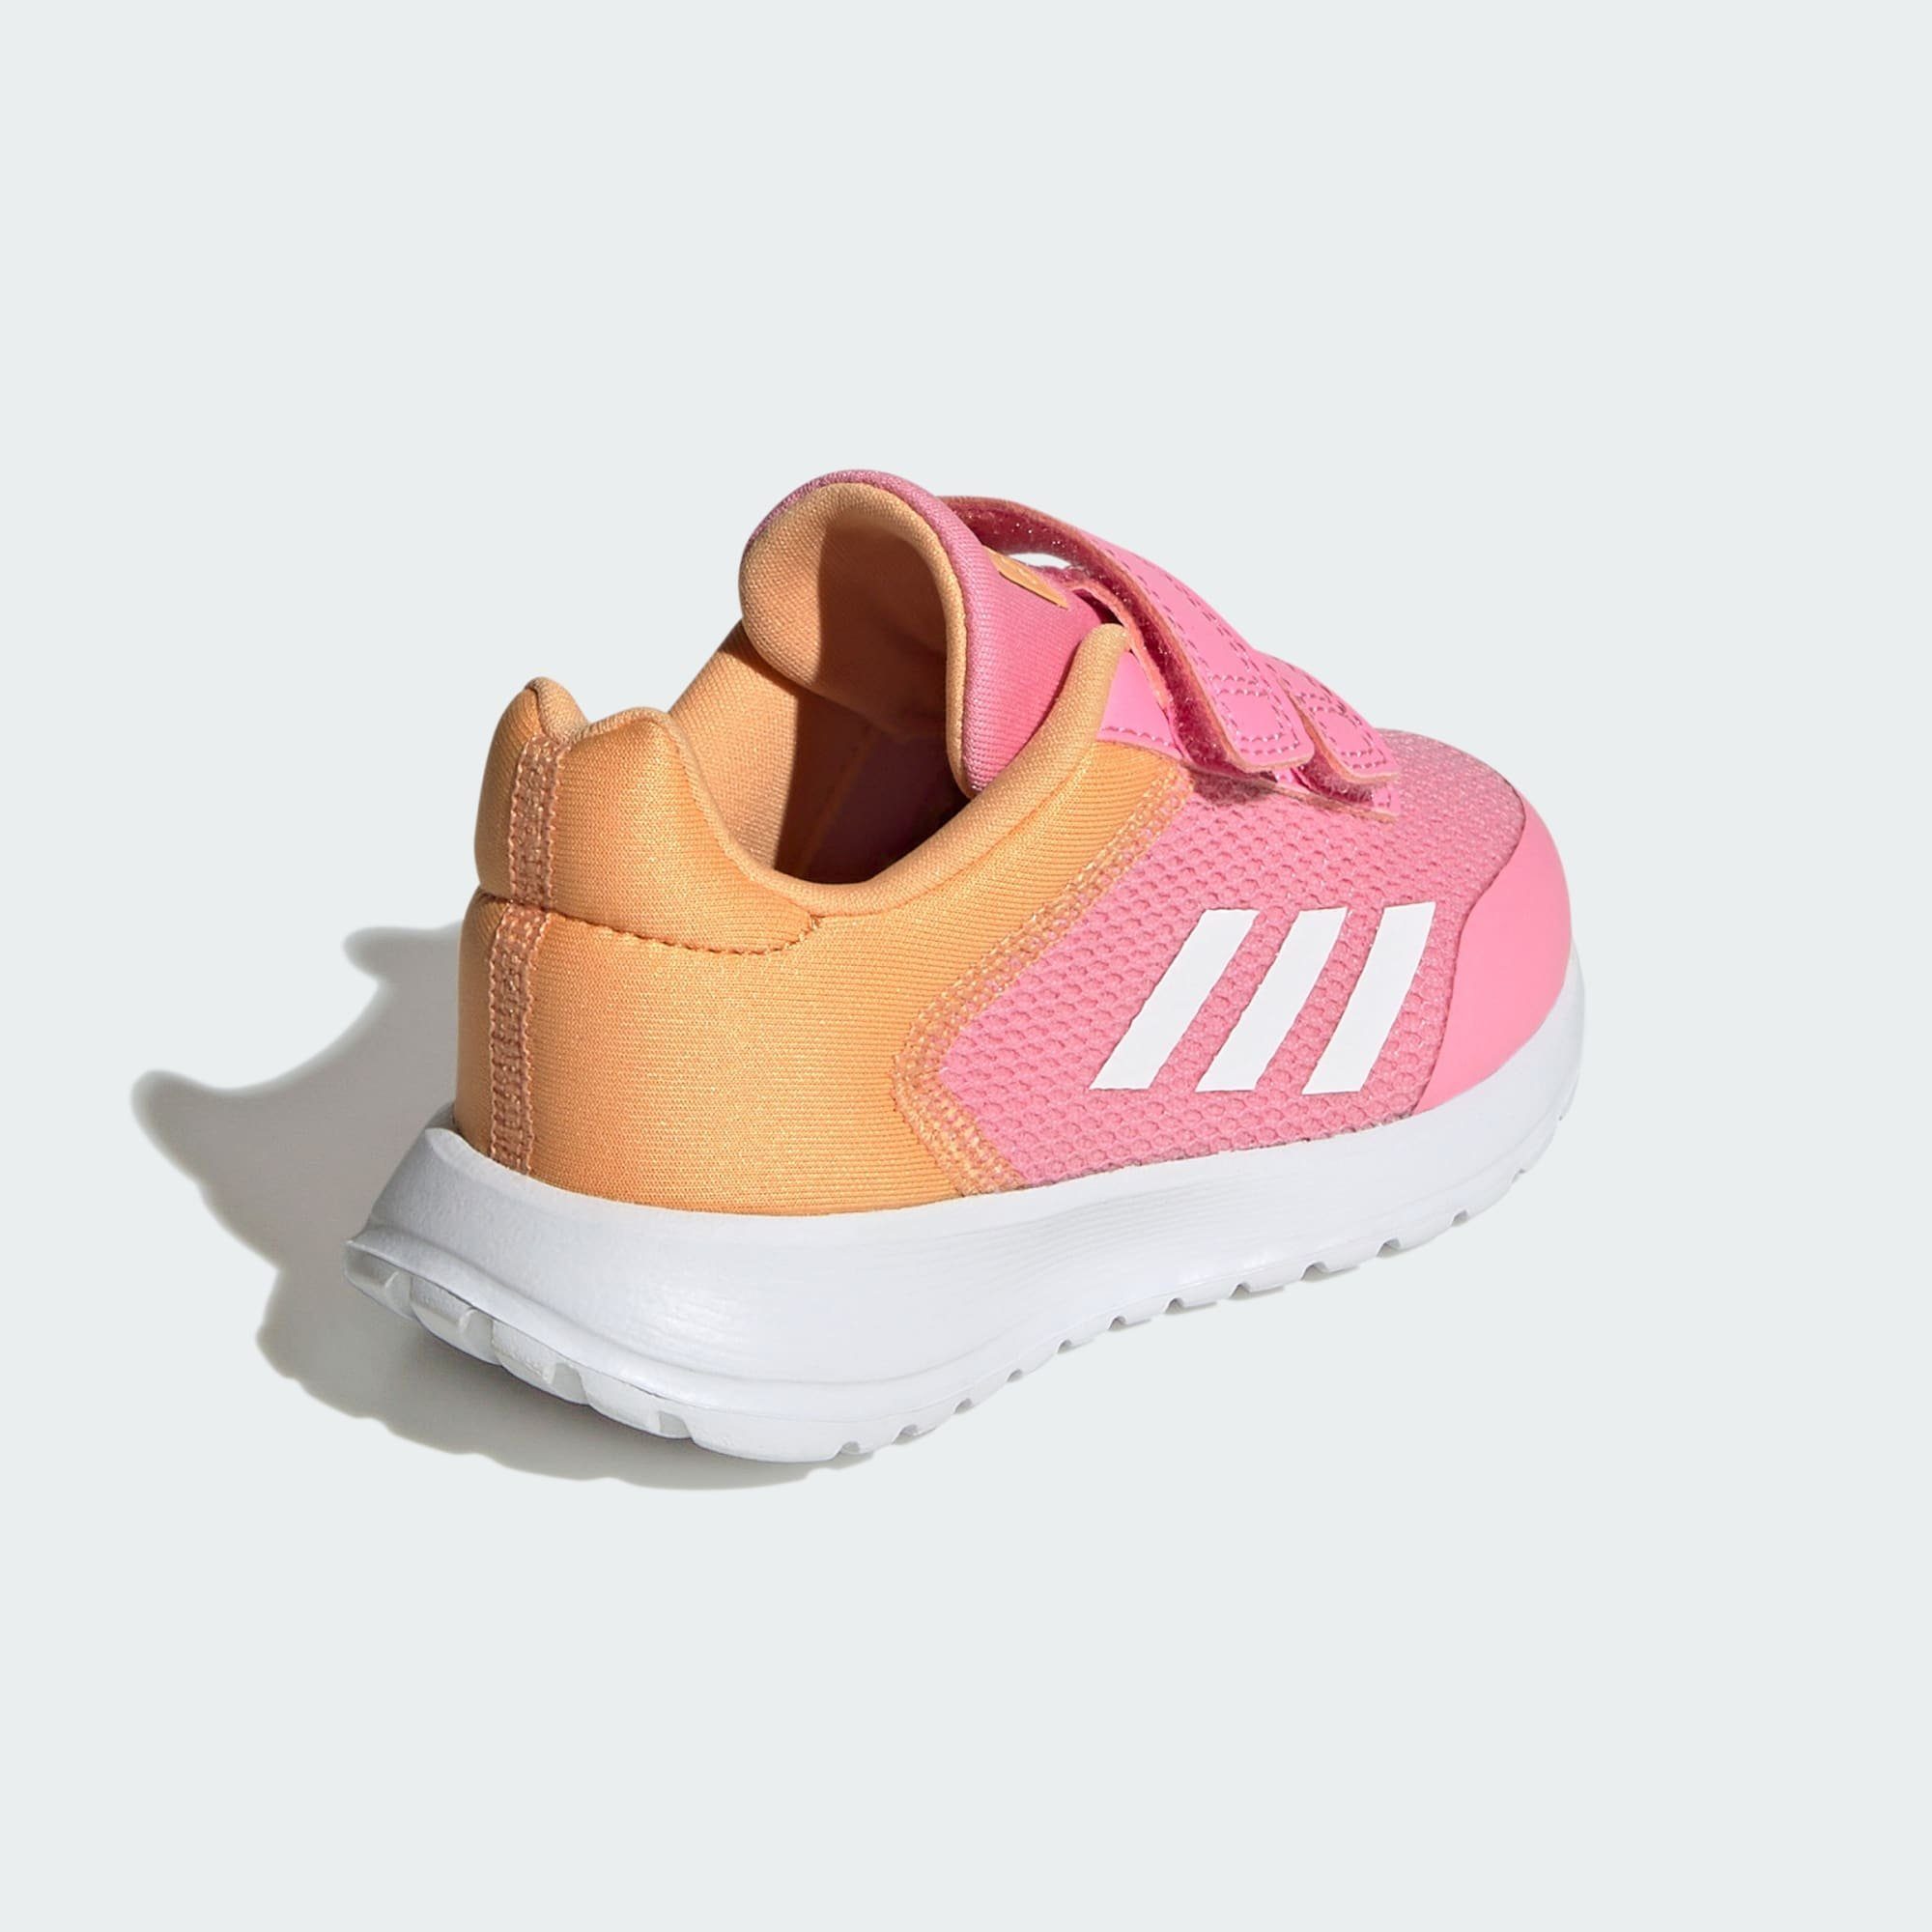 Pink / Cloud Bliss Sportswear / Hazy TENSAUR SCHUH adidas RUN Orange White Sneaker